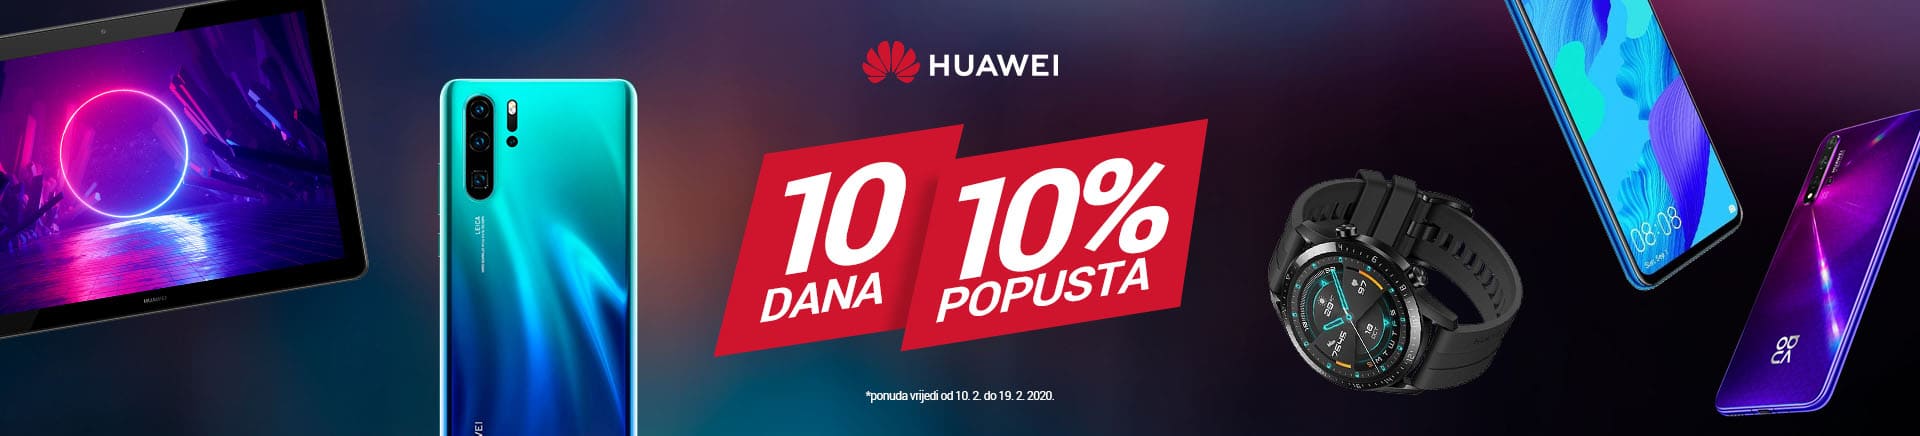 HR_10 dana 10 posto popusta_Huawei_MOBILE 380 X 436.jpg